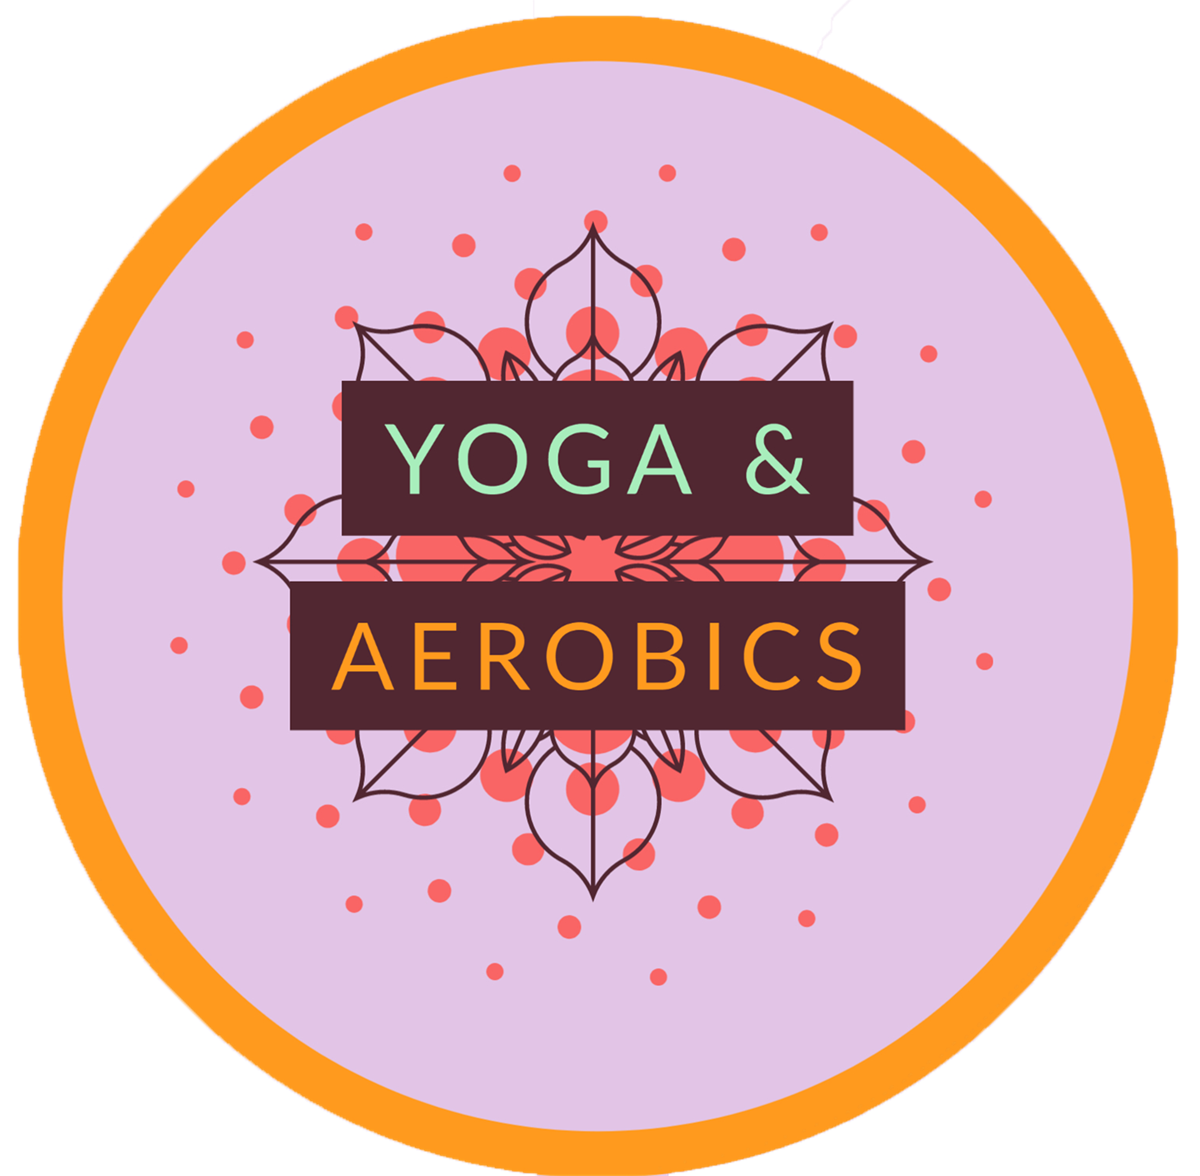 Yoga/Aerobics - Town of West Springfield